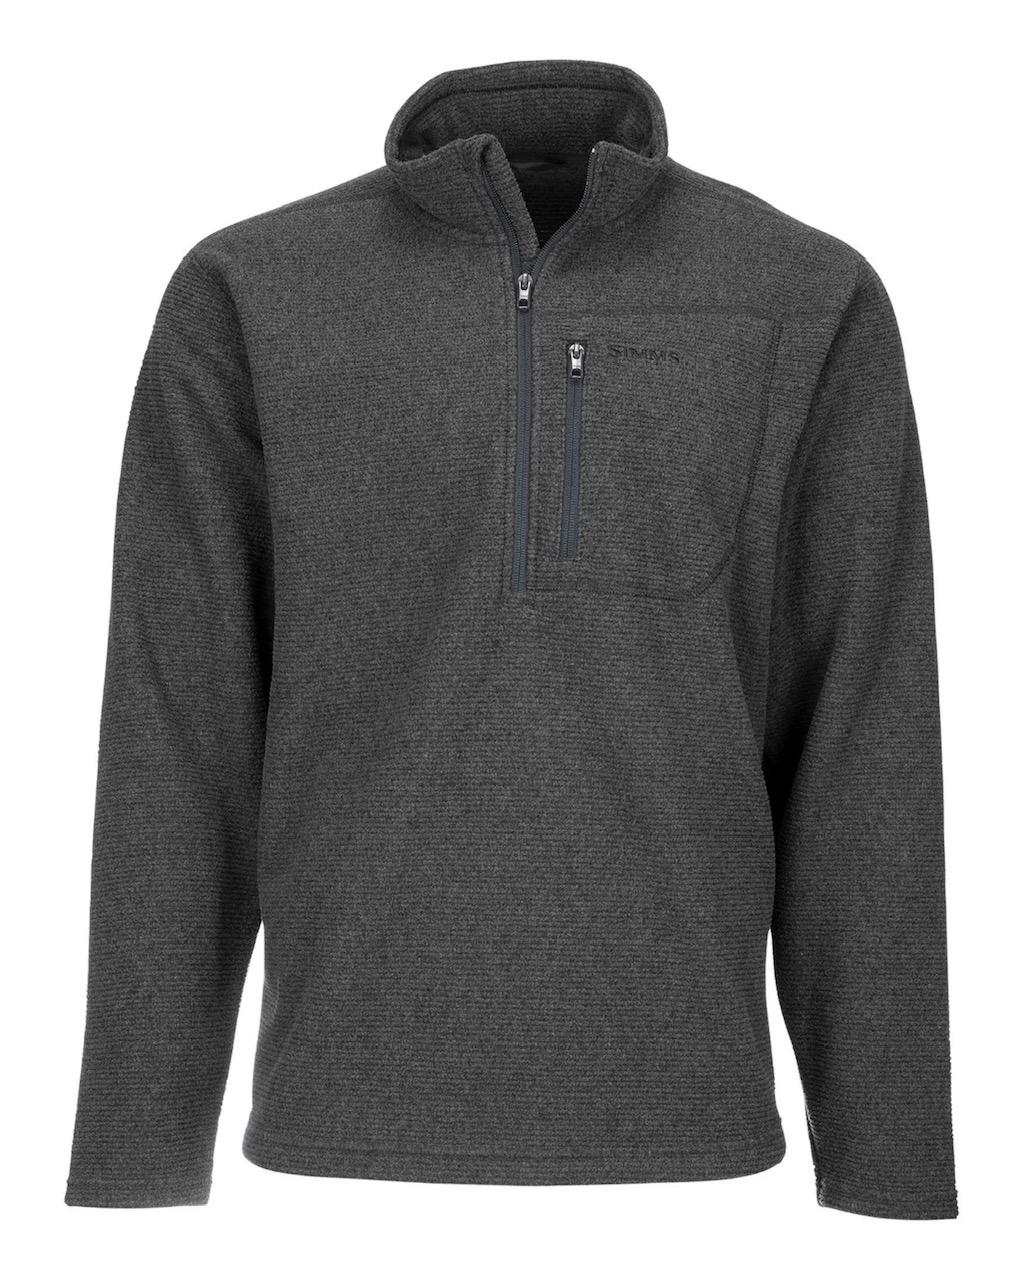 Simms M's Rivershed Quarter Zip Sweater - Carbon - XL